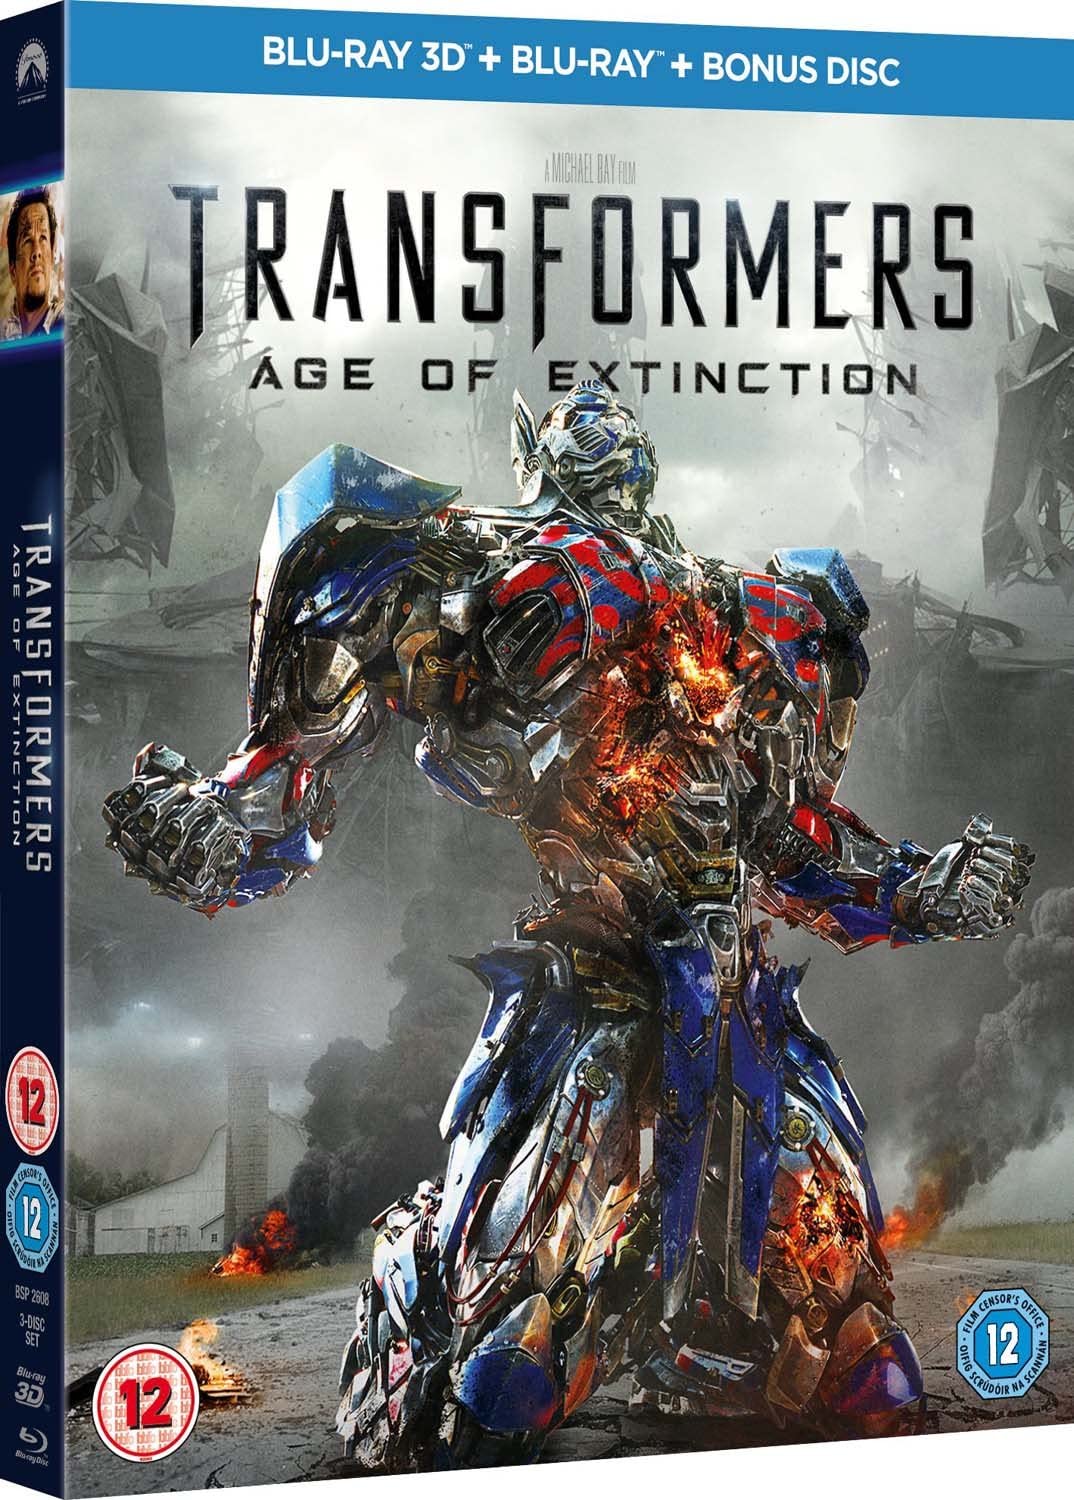 Transformers: Age of Extinction [Blu-ray 3D + Blu-ray + Disque bonus] [Région gratuite]